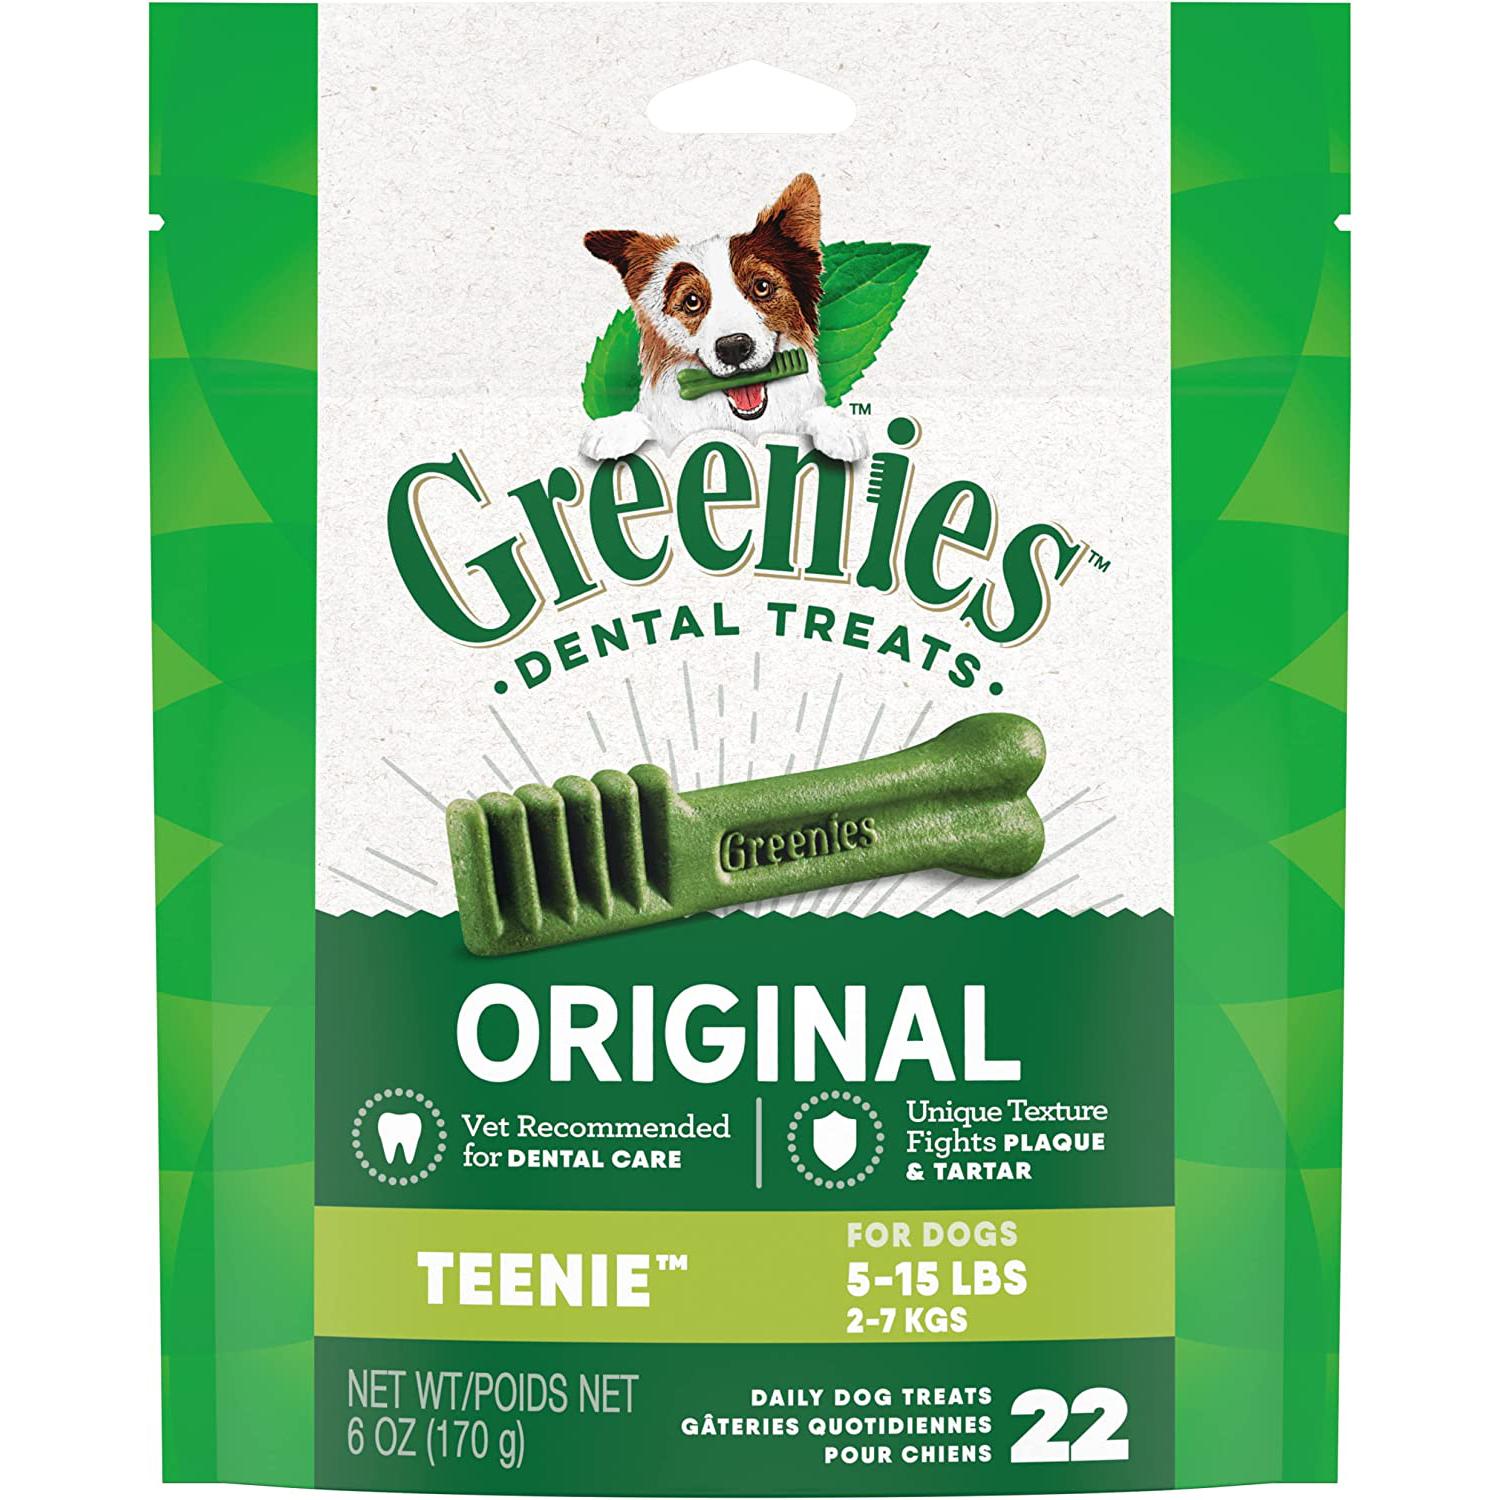 Greenies Original Natural Dental Care Teenie Dog Treats for $4.78 Shipped